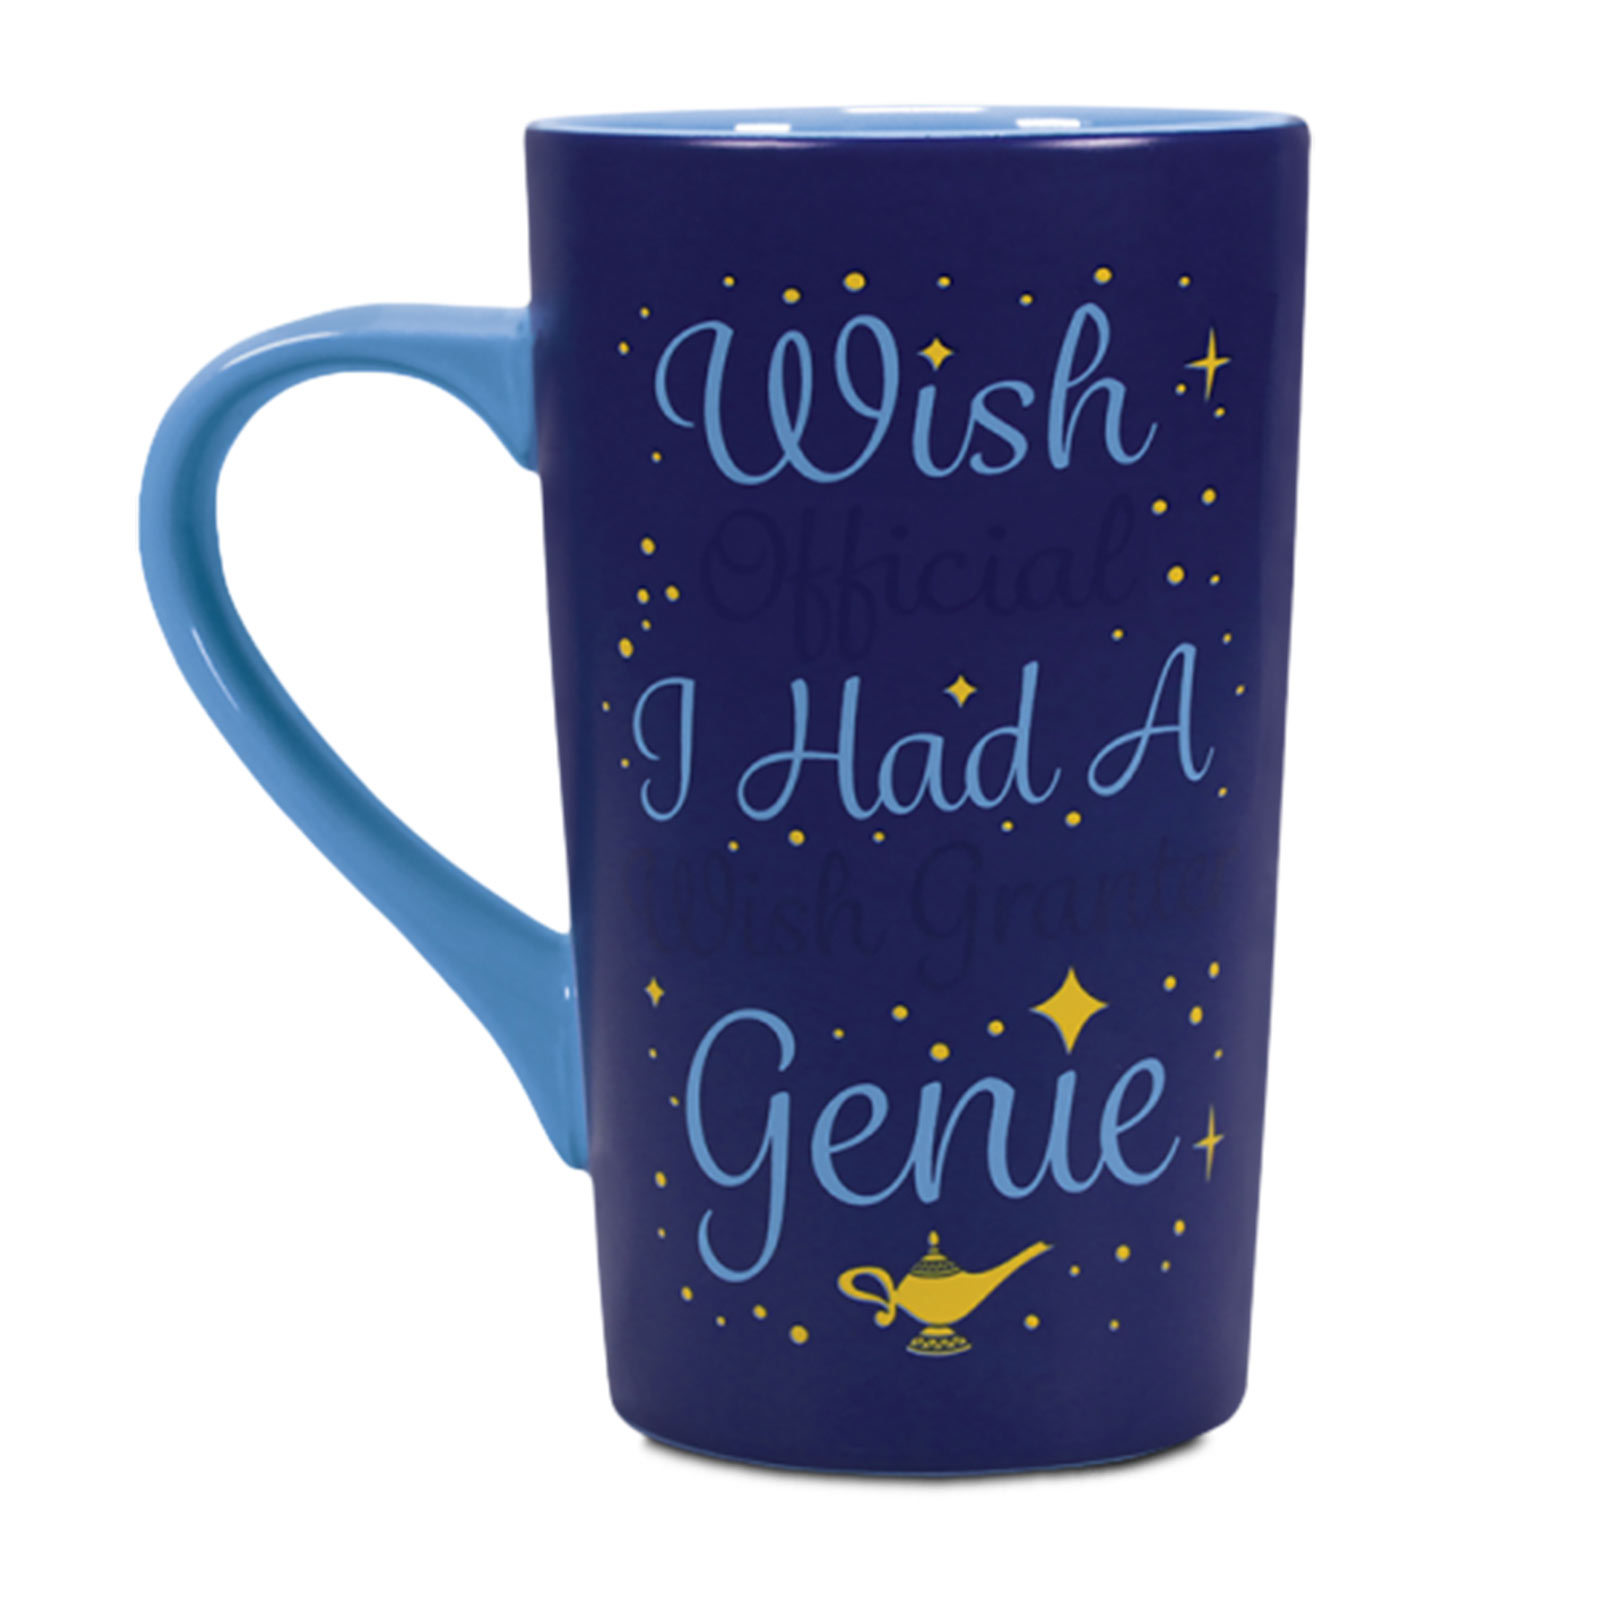 Aladdin and Genie Thermoeffect Mug